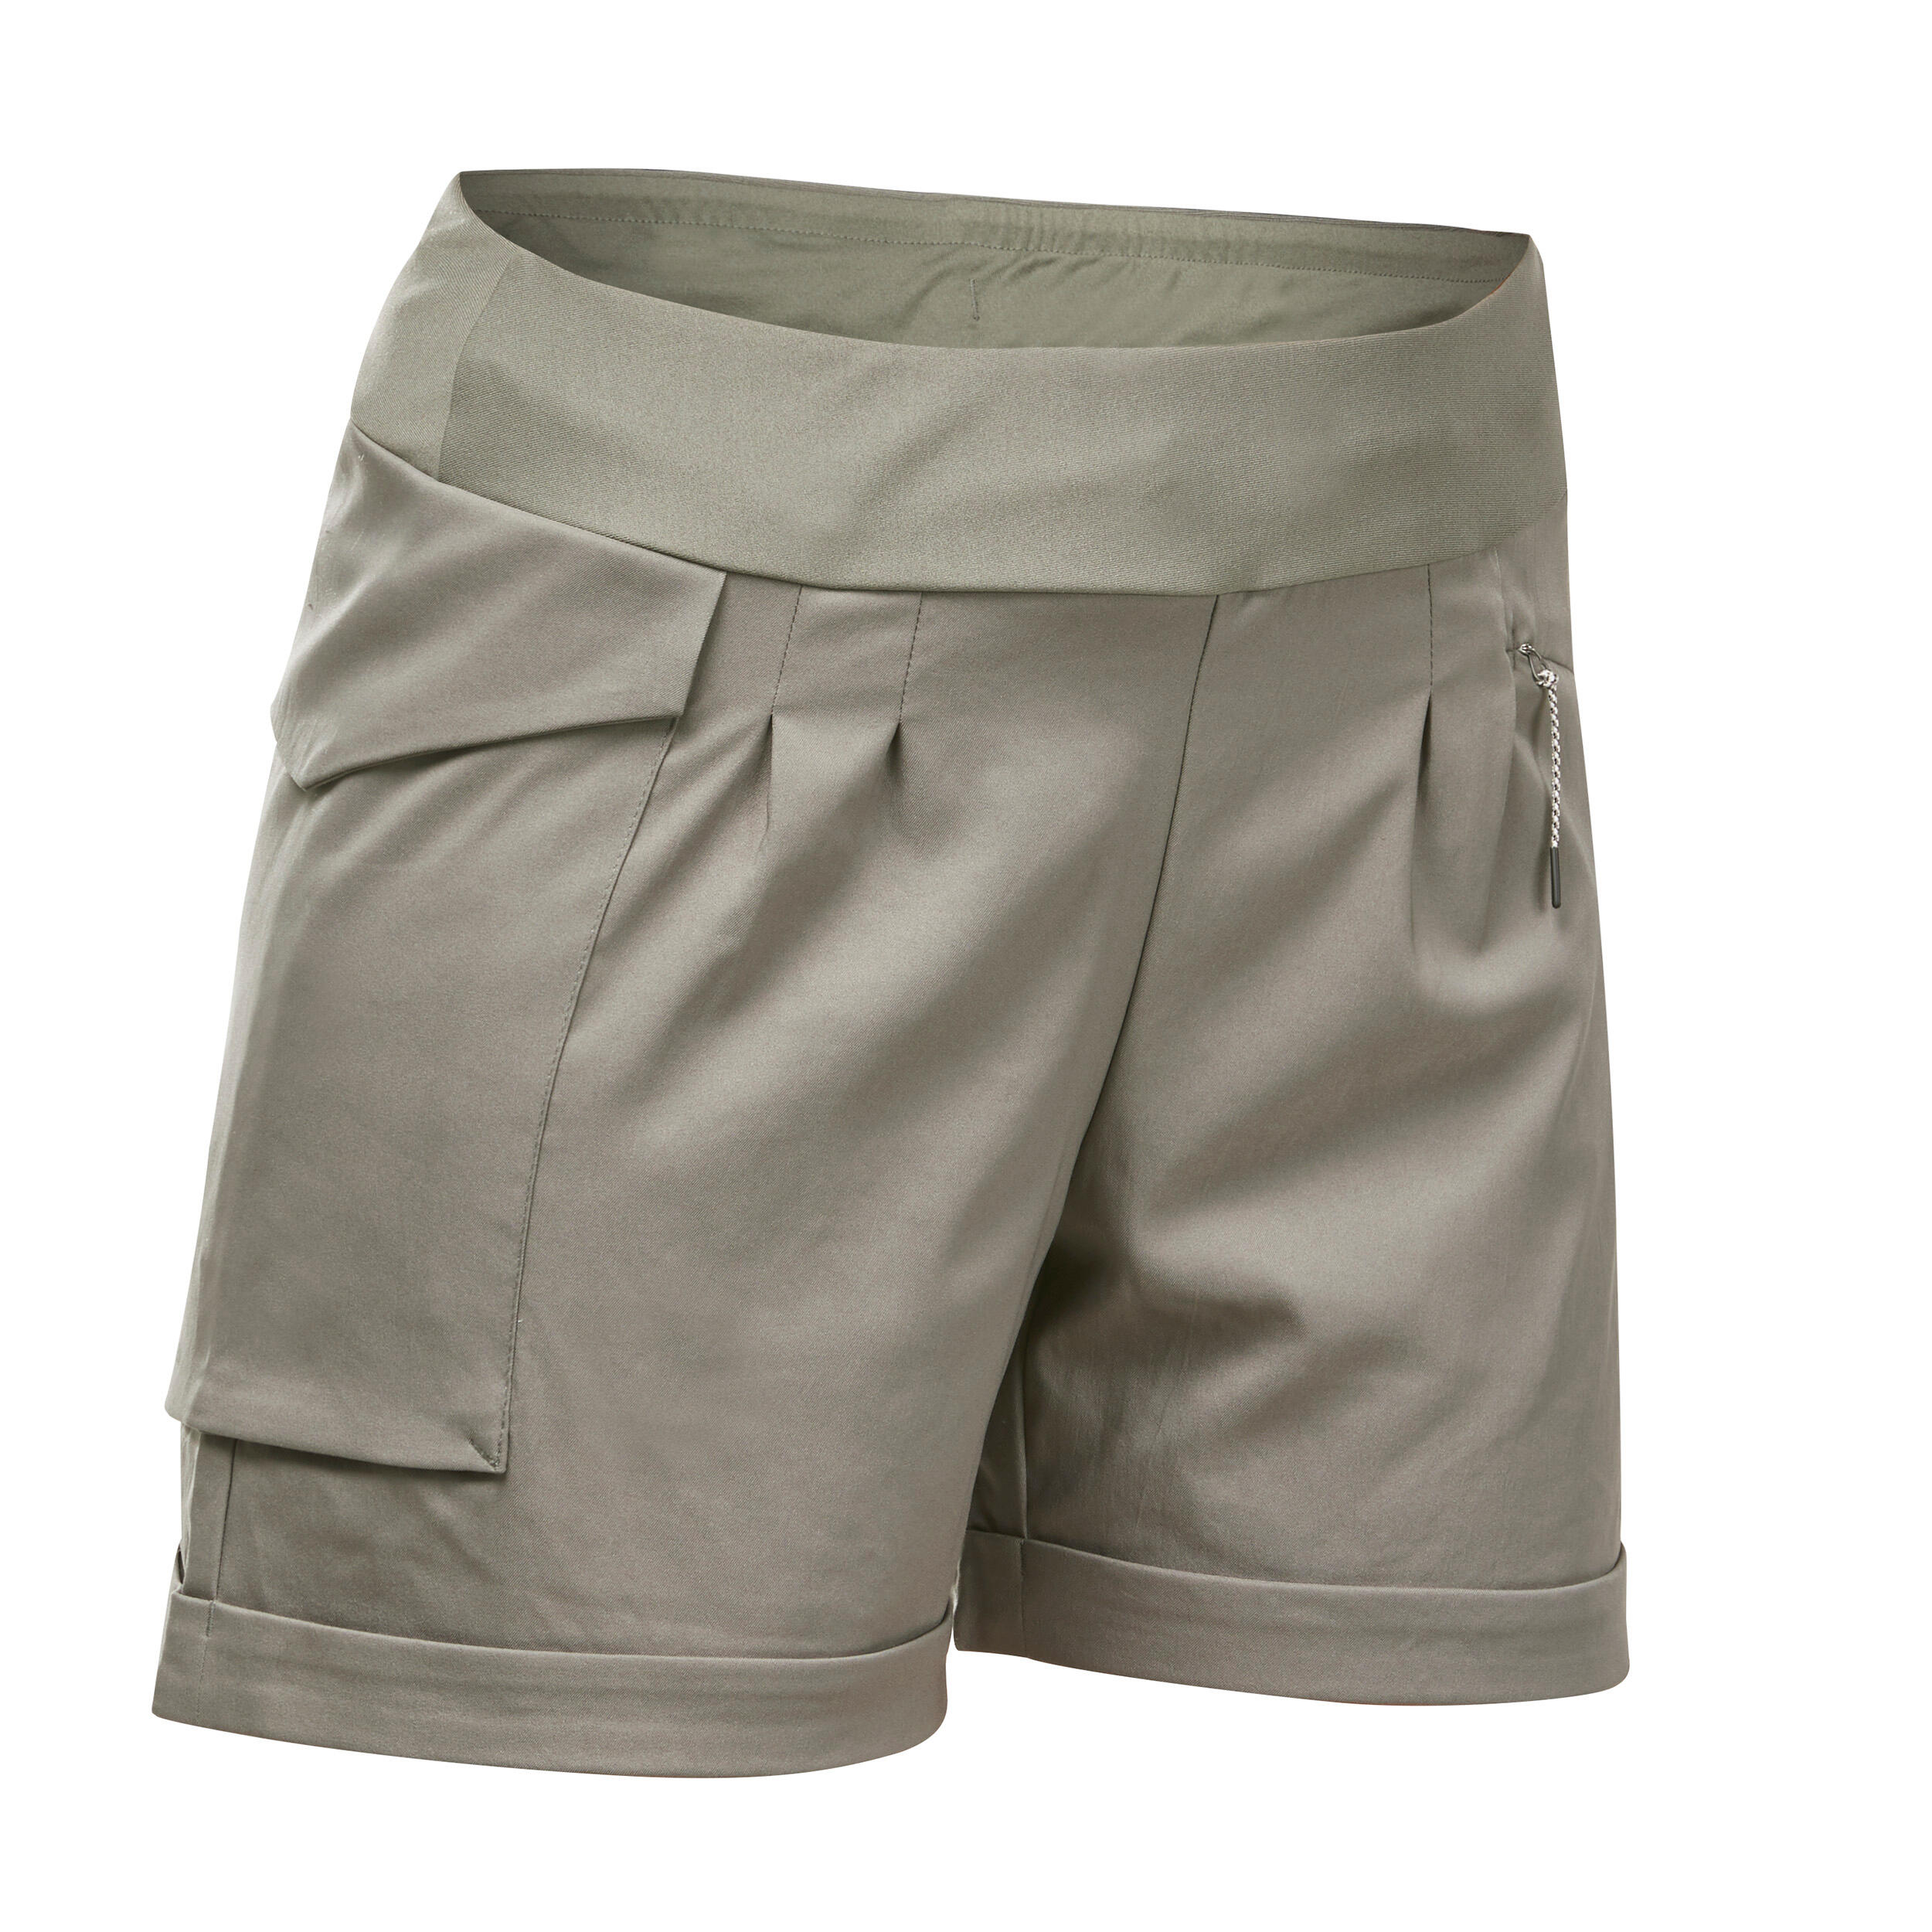 NH500 Regular Women's Country Walking Shorts - Khaki 1/8